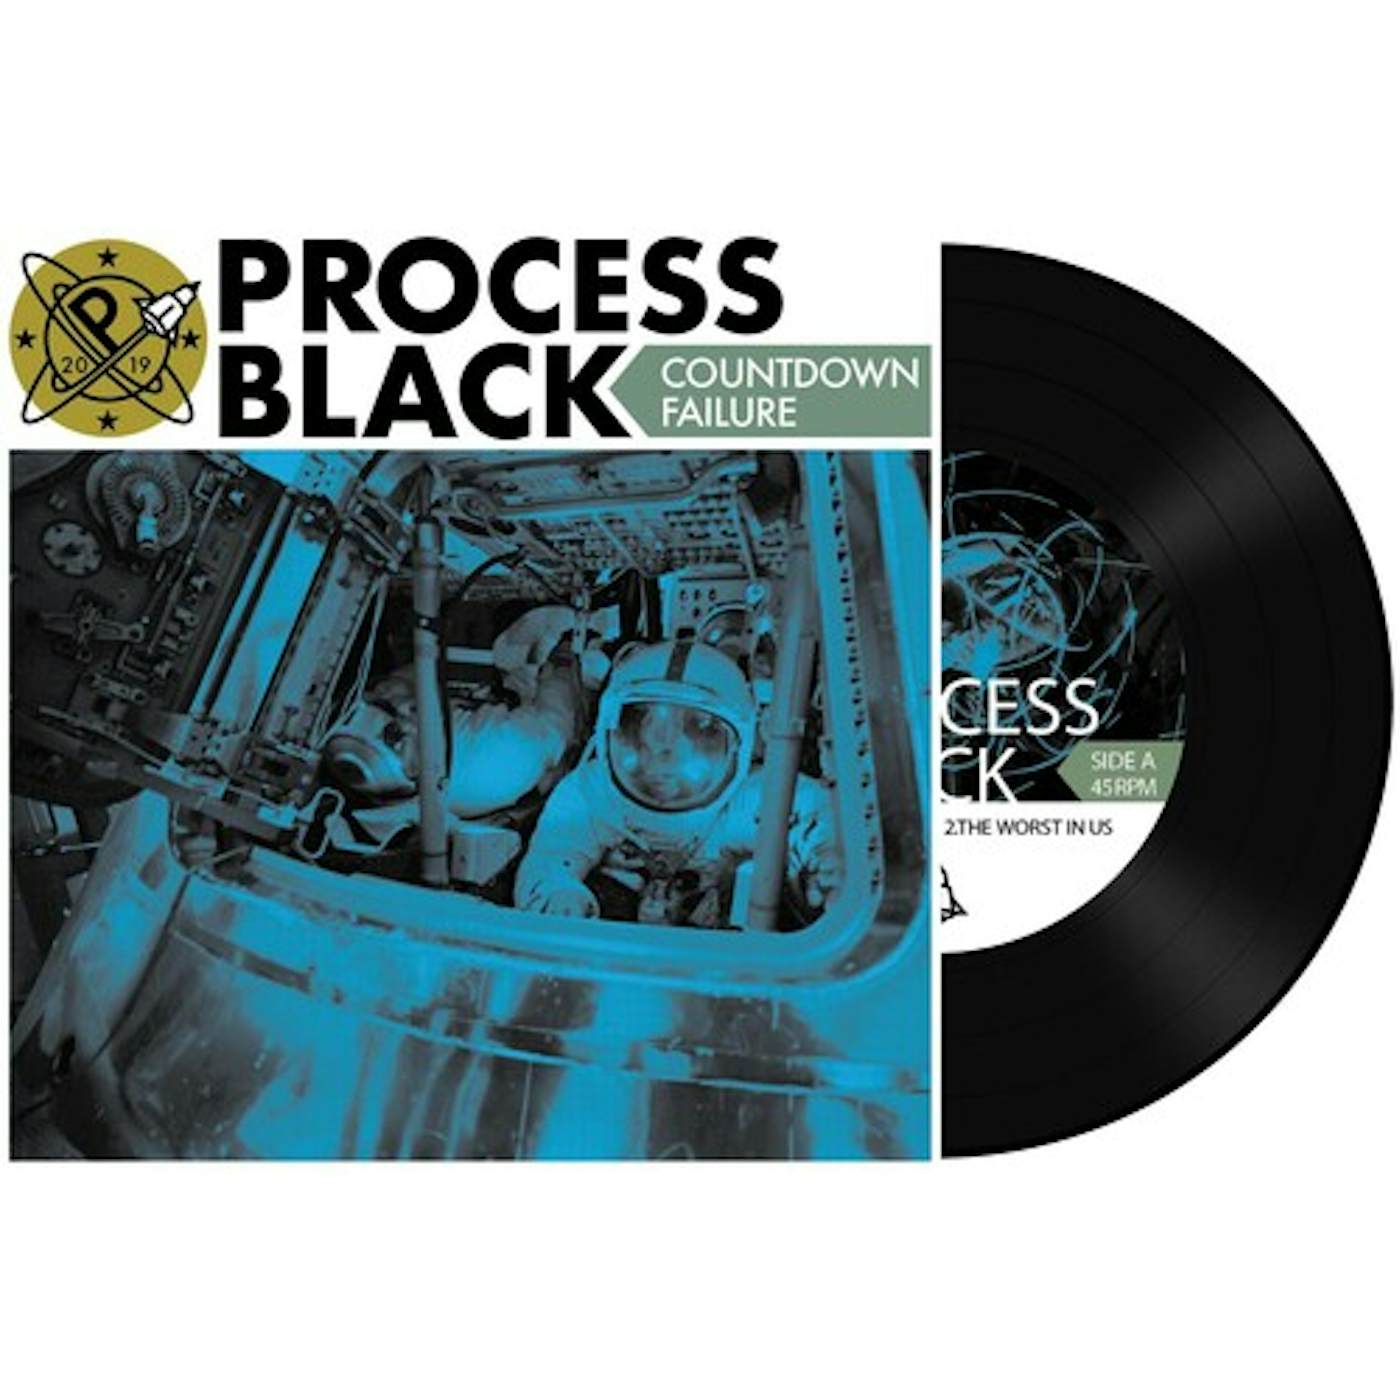 Process Black Countdown Failure Vinyl Record